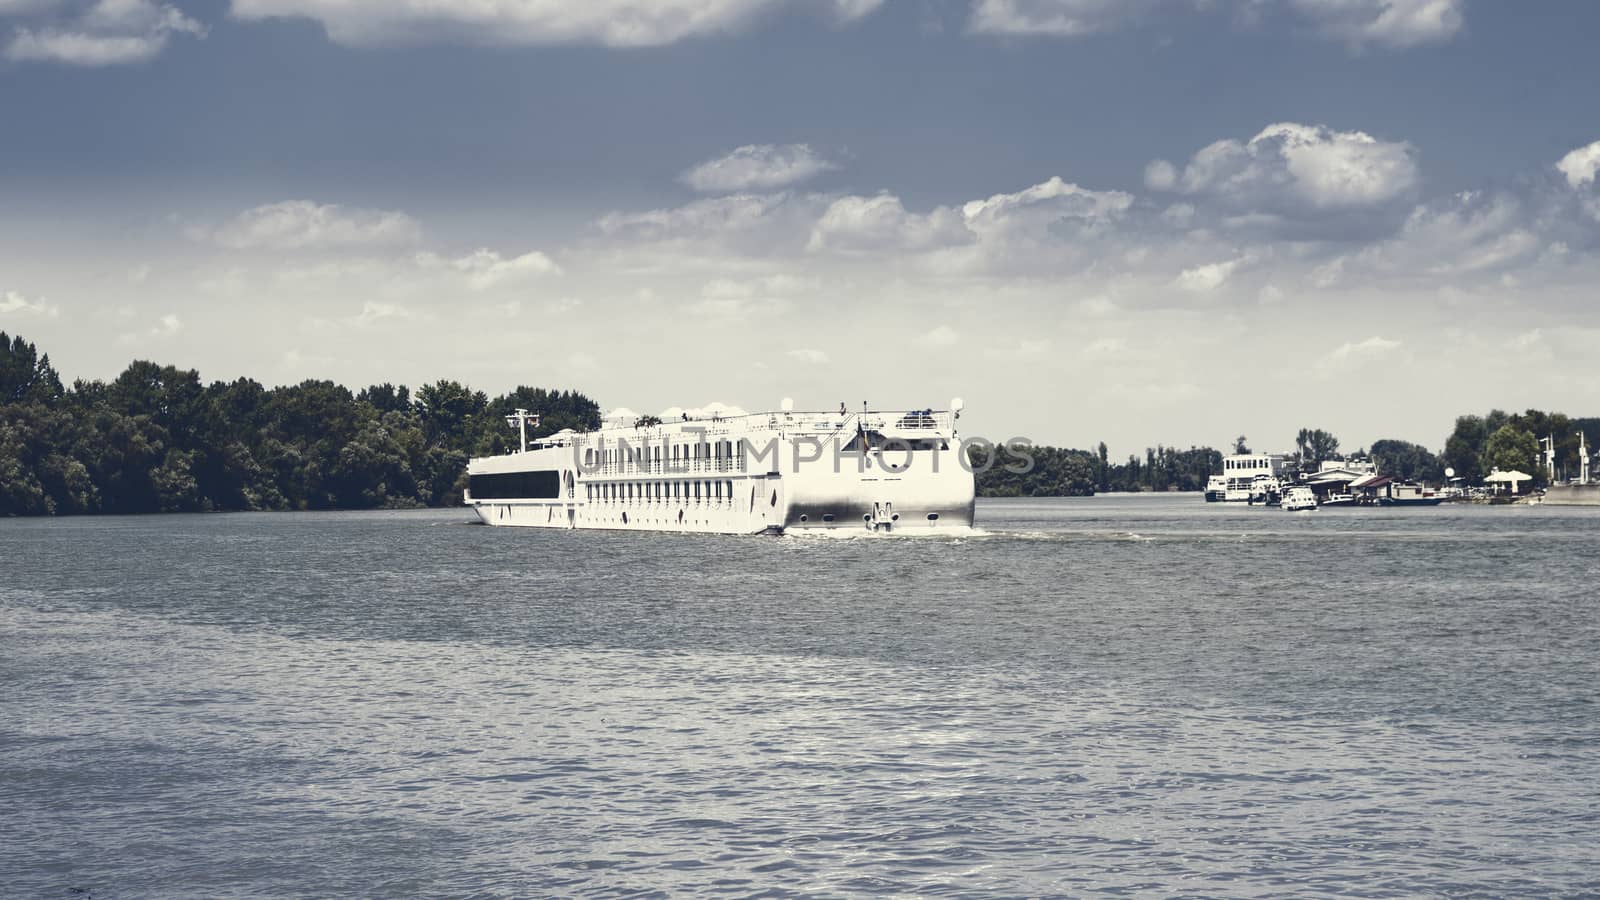 Cruise Ship On The River Danube  by alexandarilich